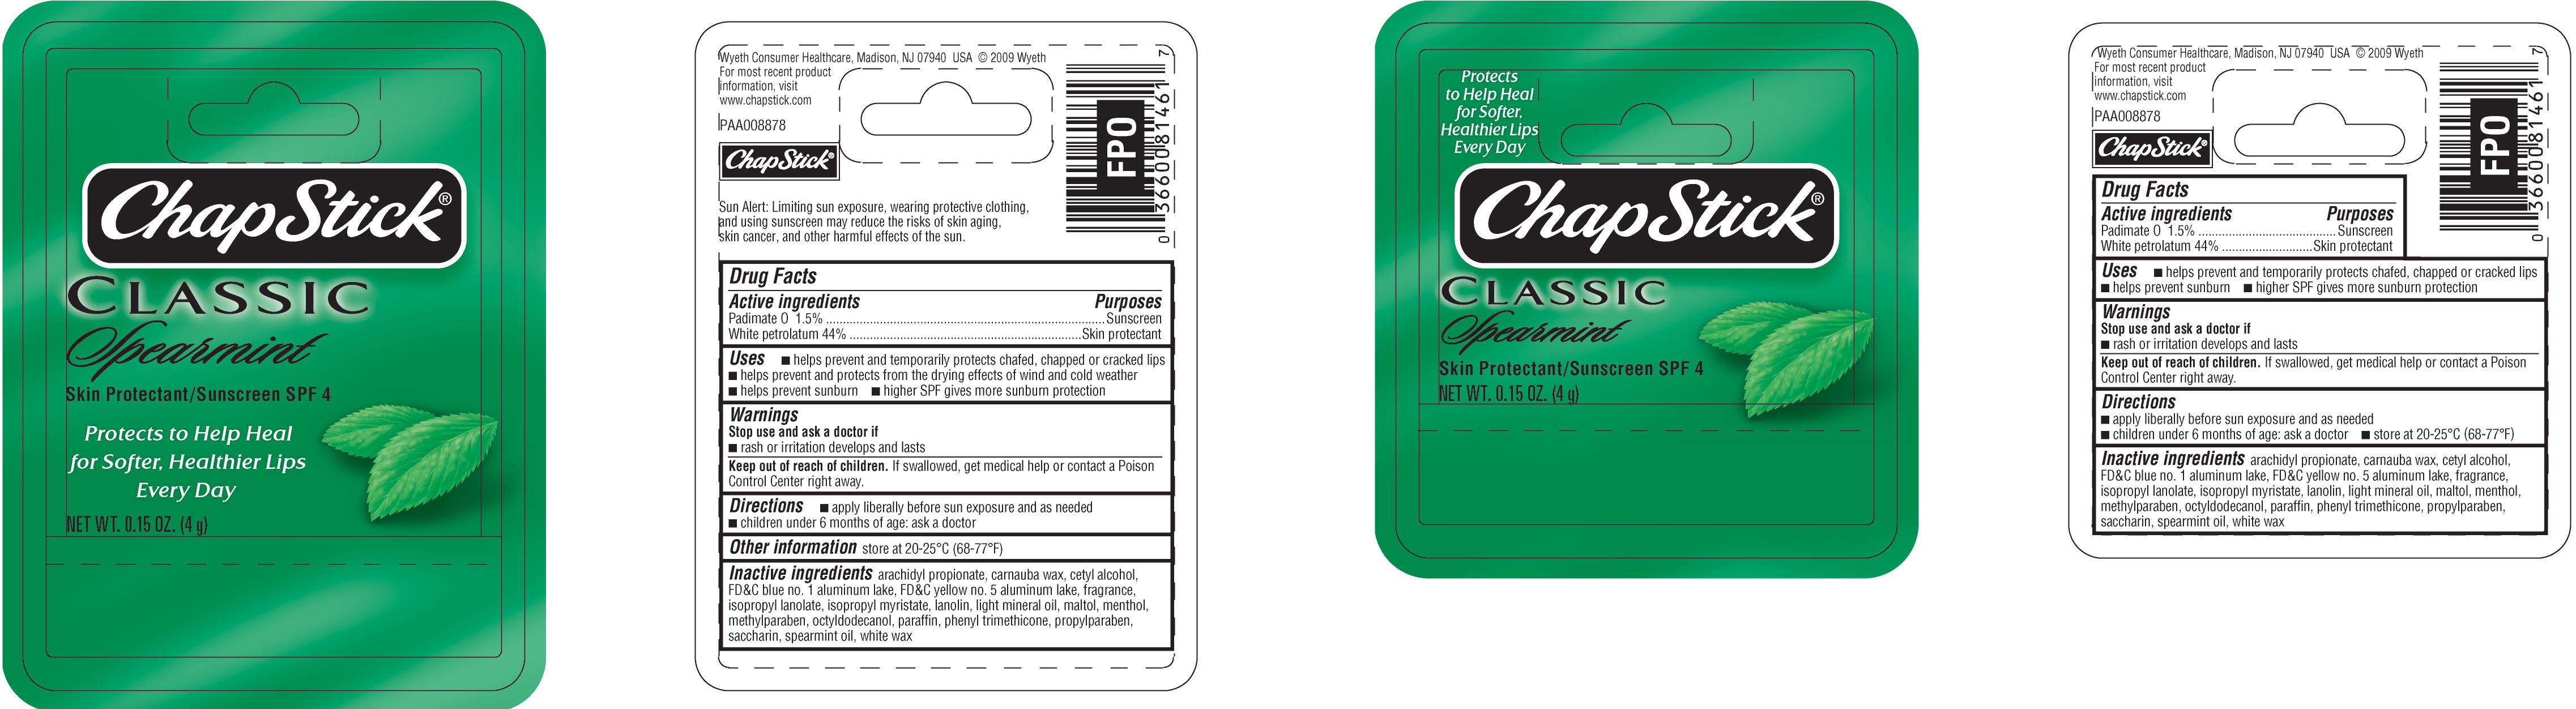 ChapStick Classic Spearmint Packaging